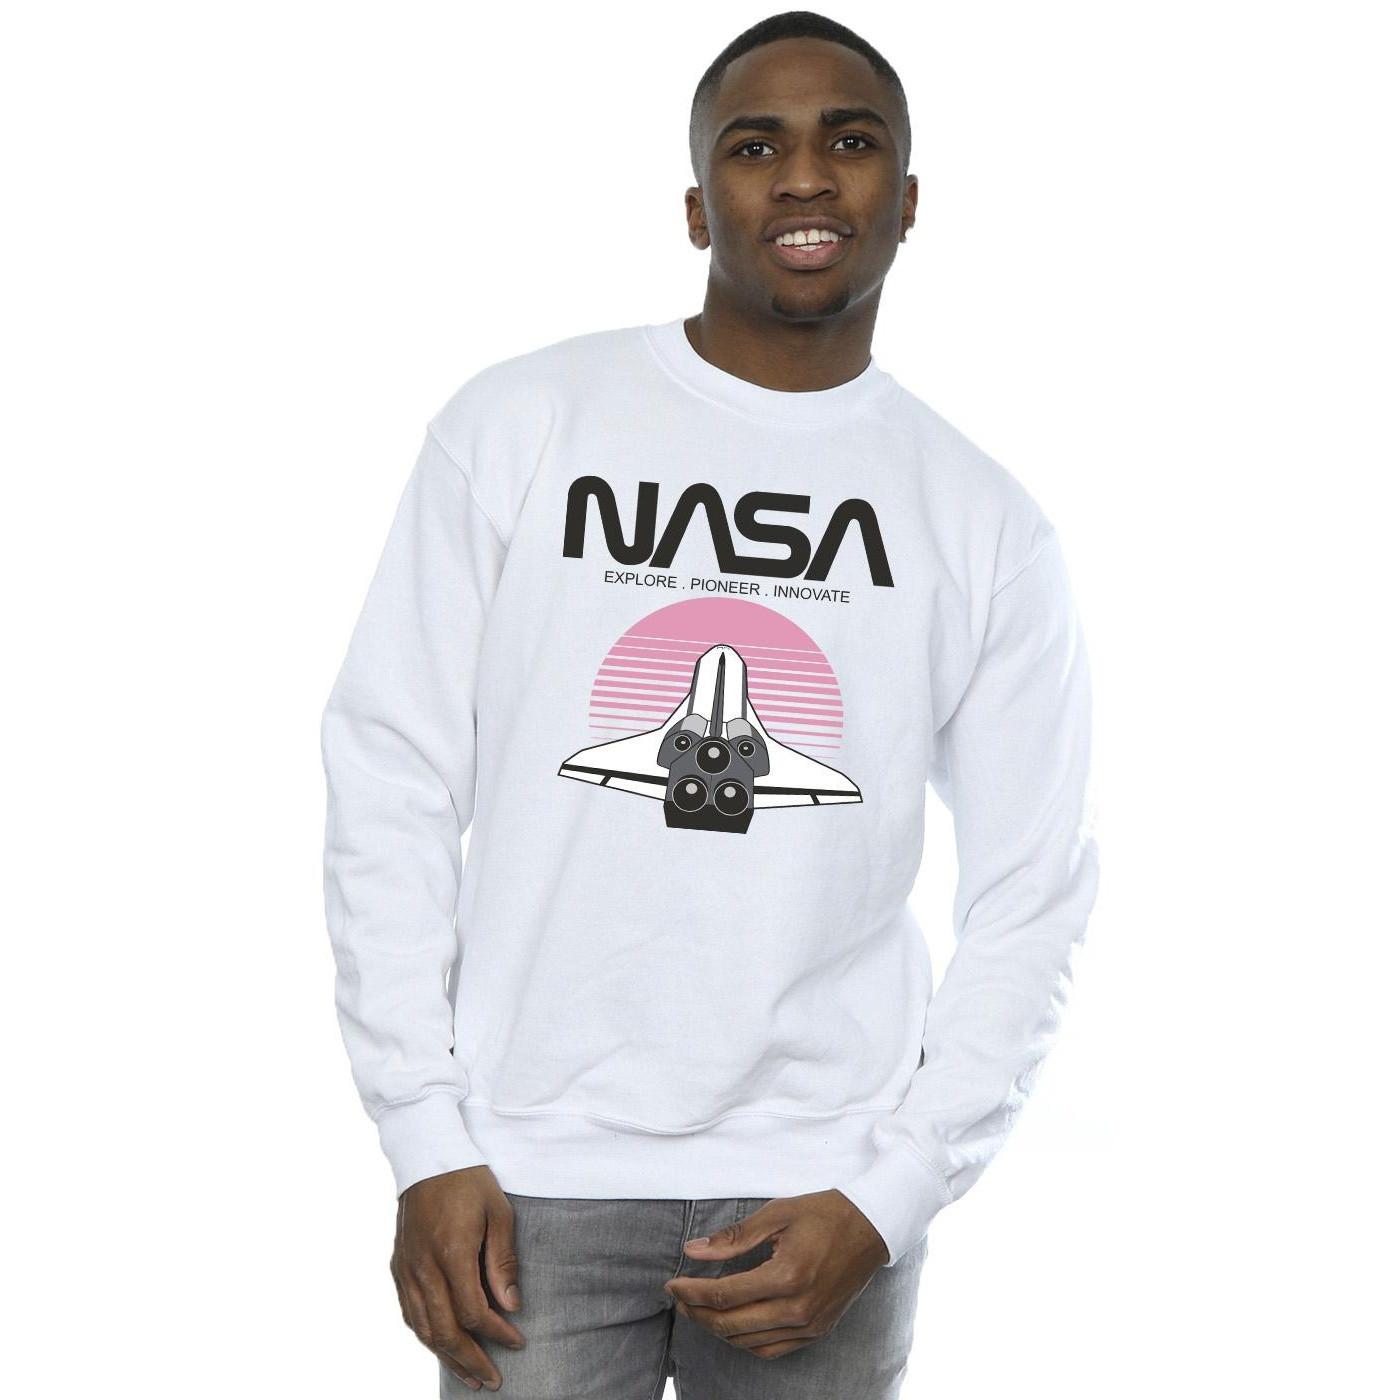 Nasa  Space Shuttle Sunset Sweatshirt 